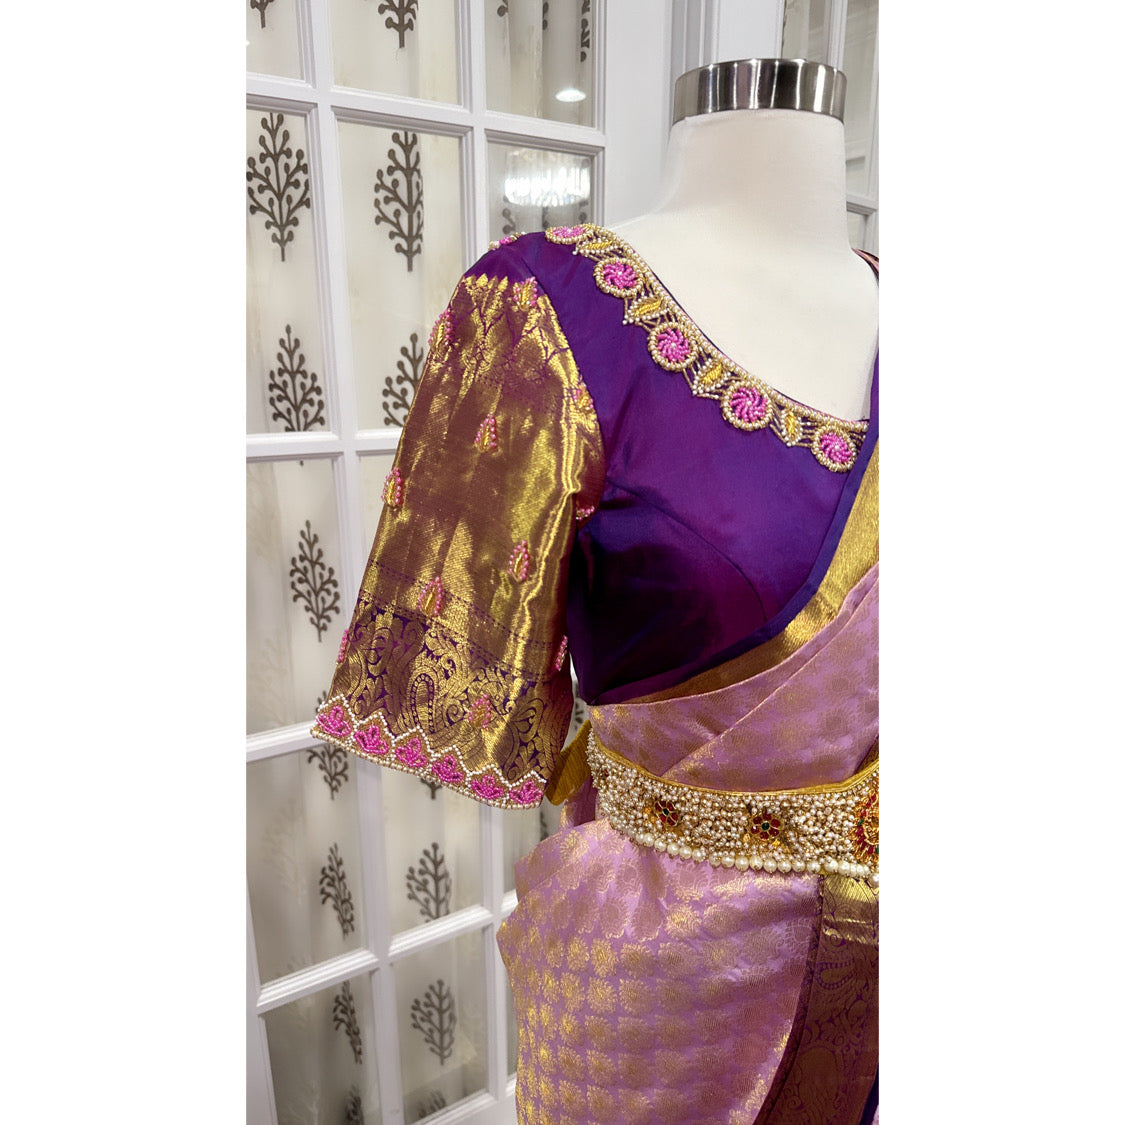 Stunning Kanchi Pattu Saree silk mark certified in Lilac and purple hues featuring exquisite Maggam work! Wedding saree